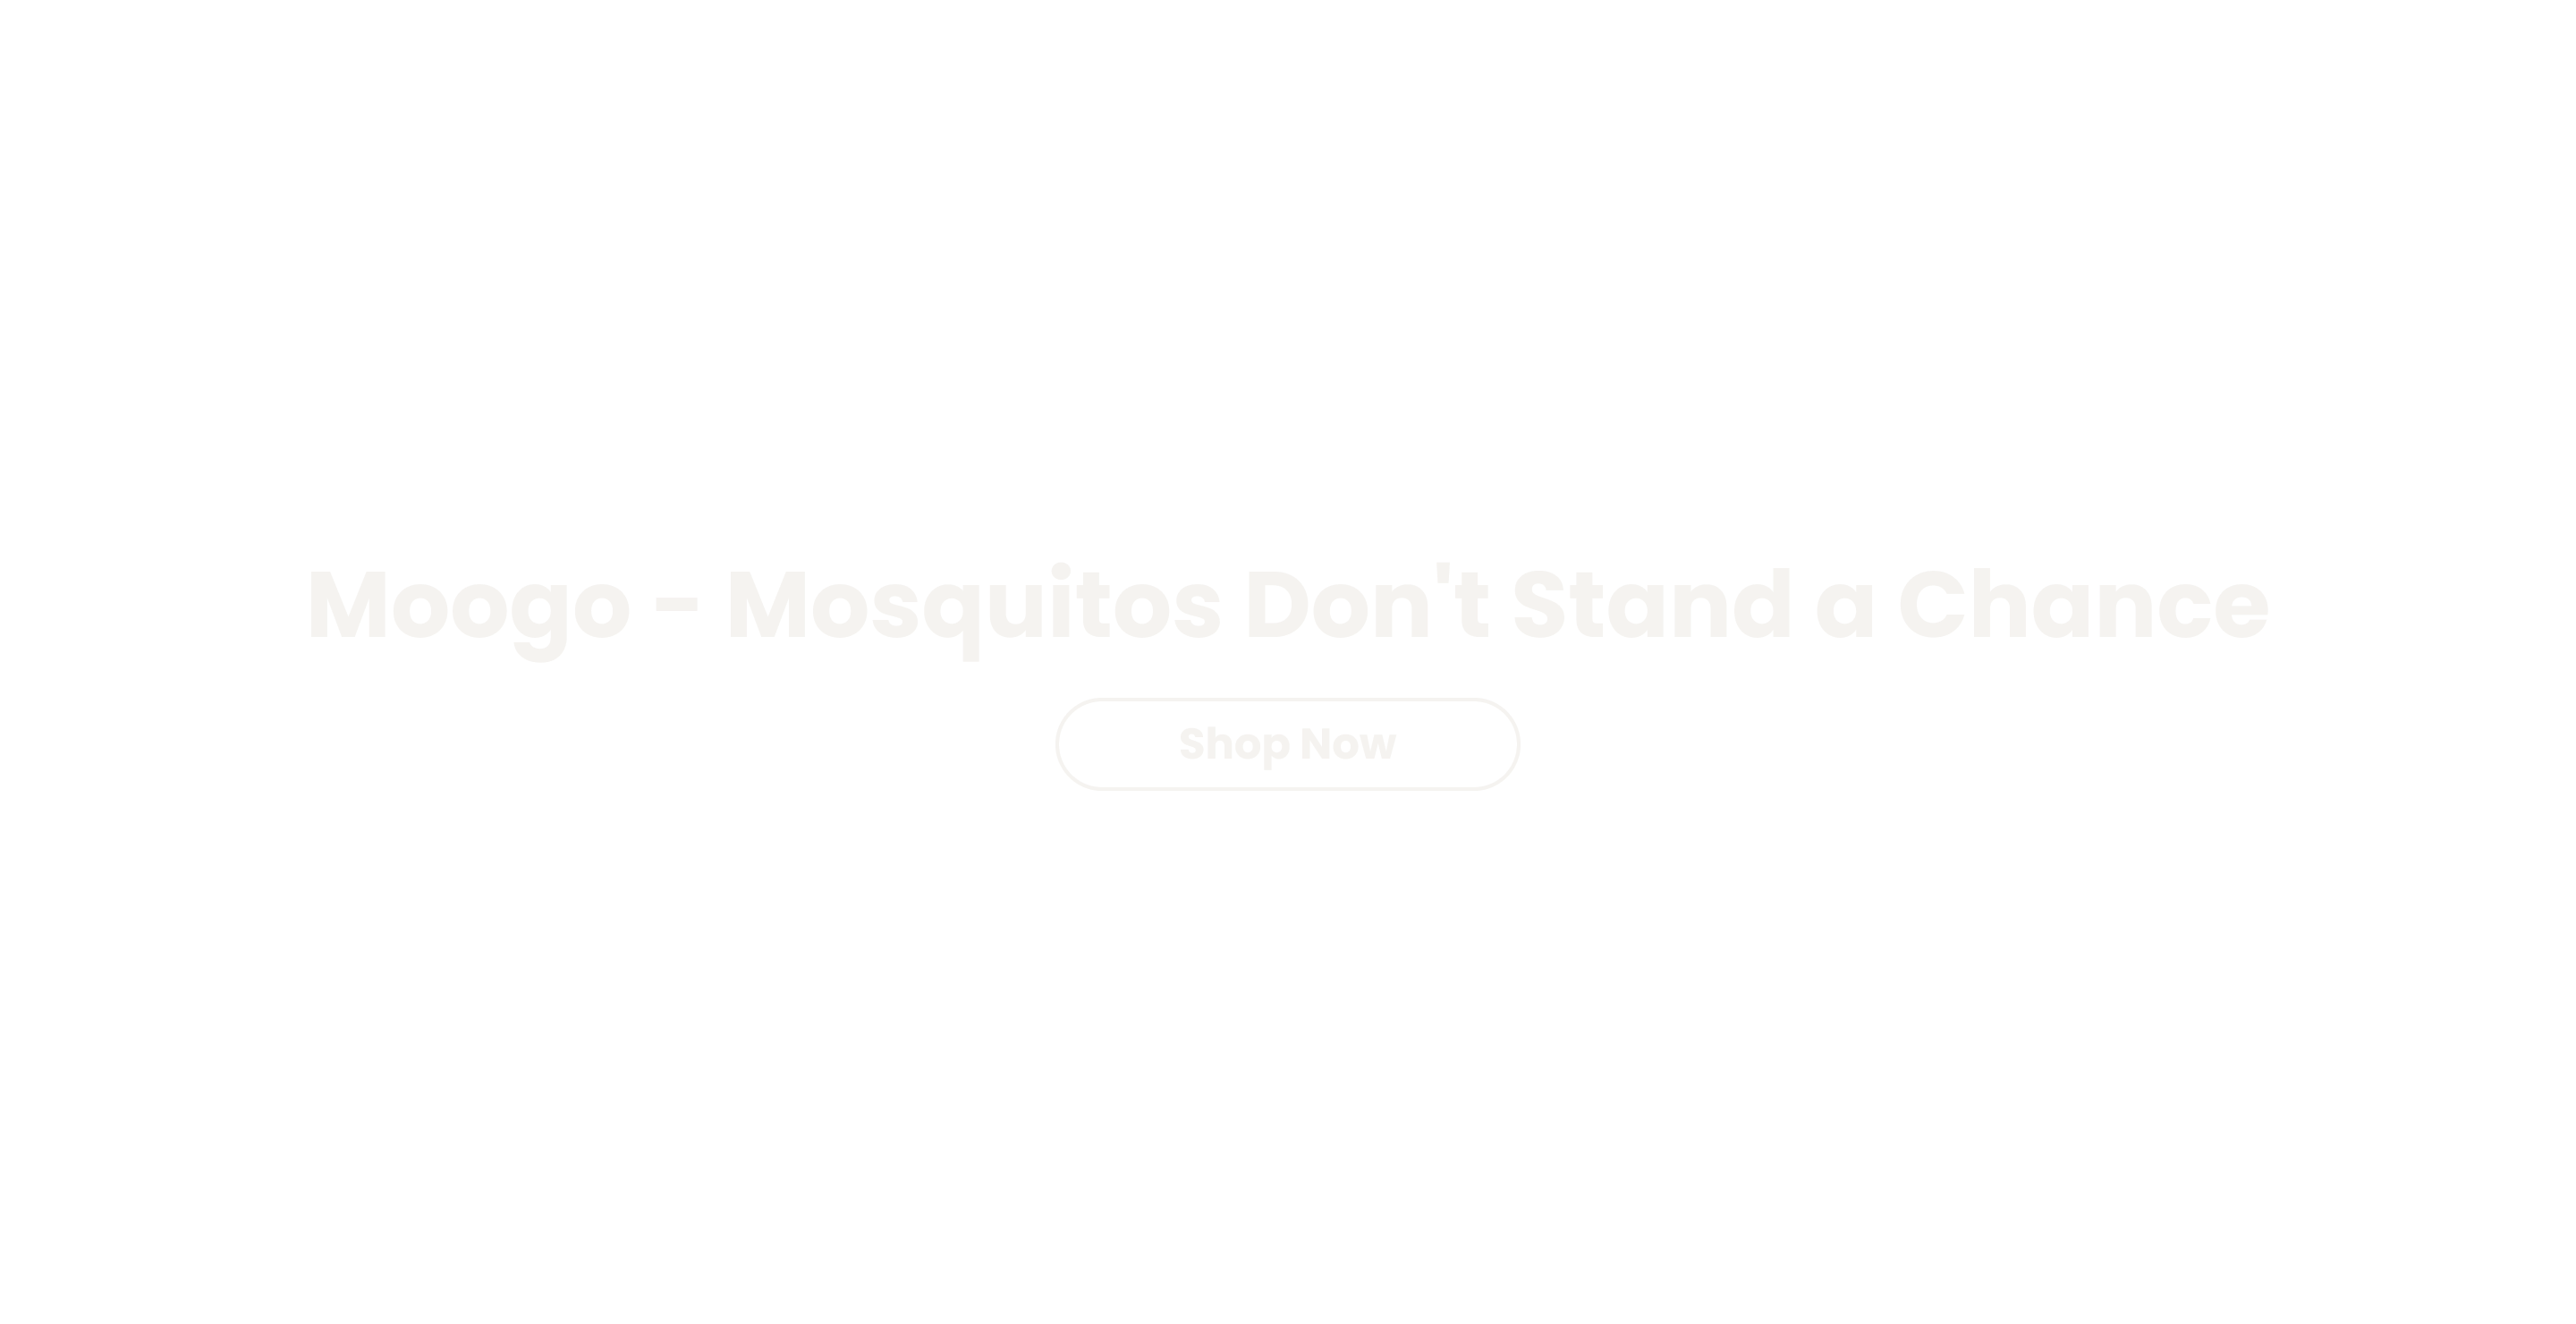 Use Moogo To Keep Your Backyard Mosquito-Free